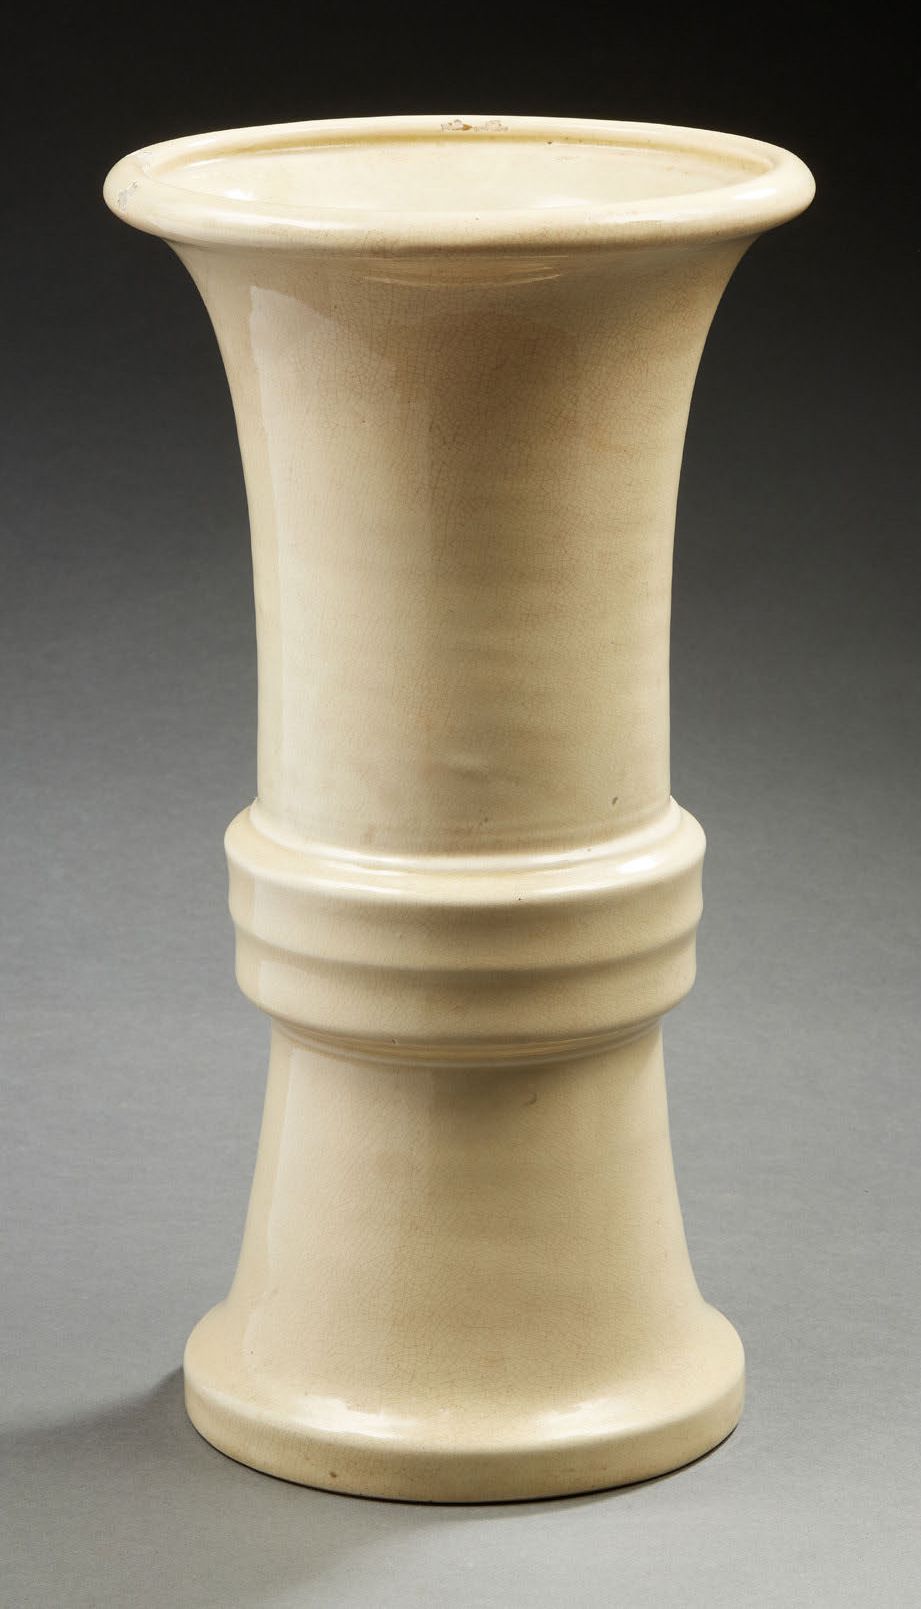 CHINE, XVIIIe-XIXe siècle 一个米色釉面陶瓷的环状体大顾花瓶。
颈部的事故和修复。
H.38.5厘米